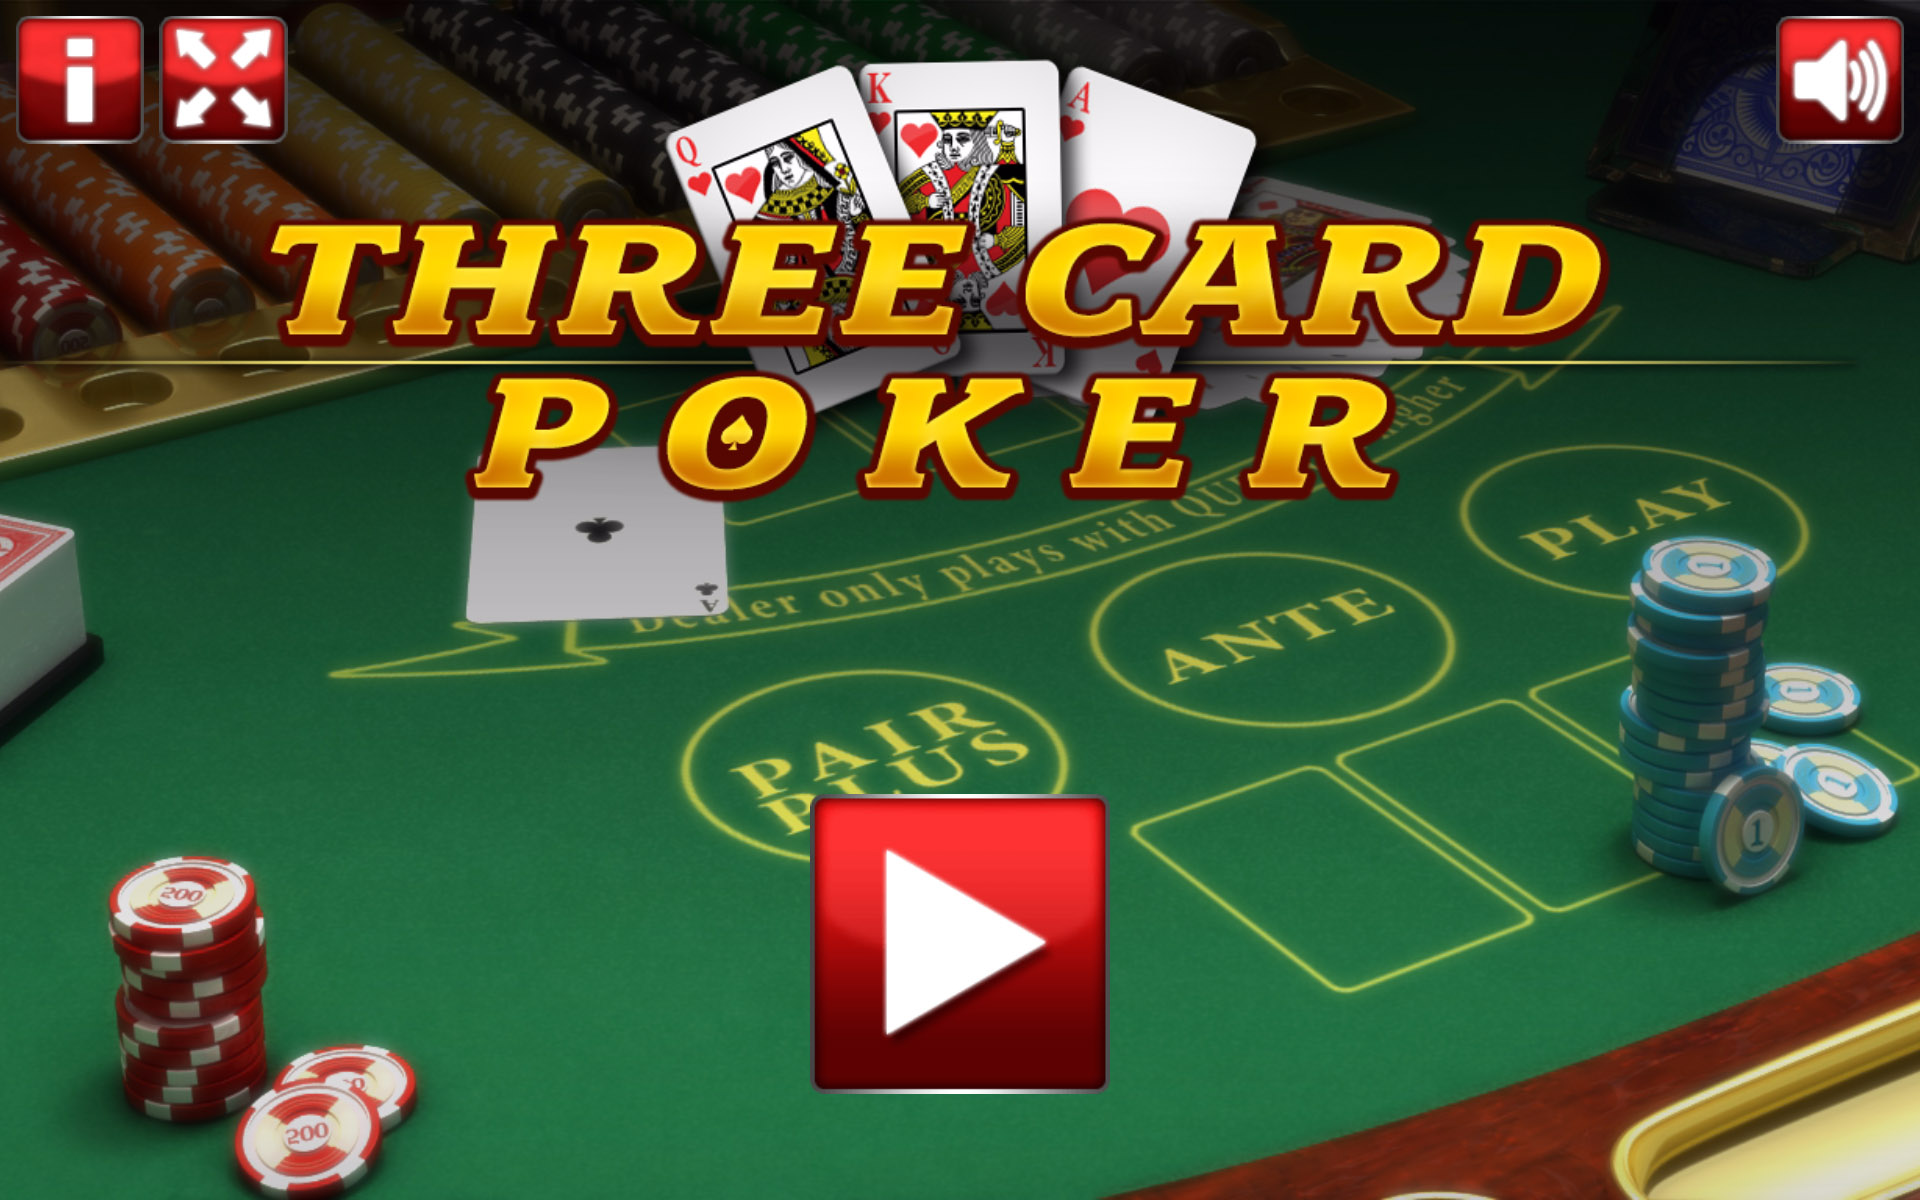 HTML5 Game: Three Card Poker - Code This Lab srl